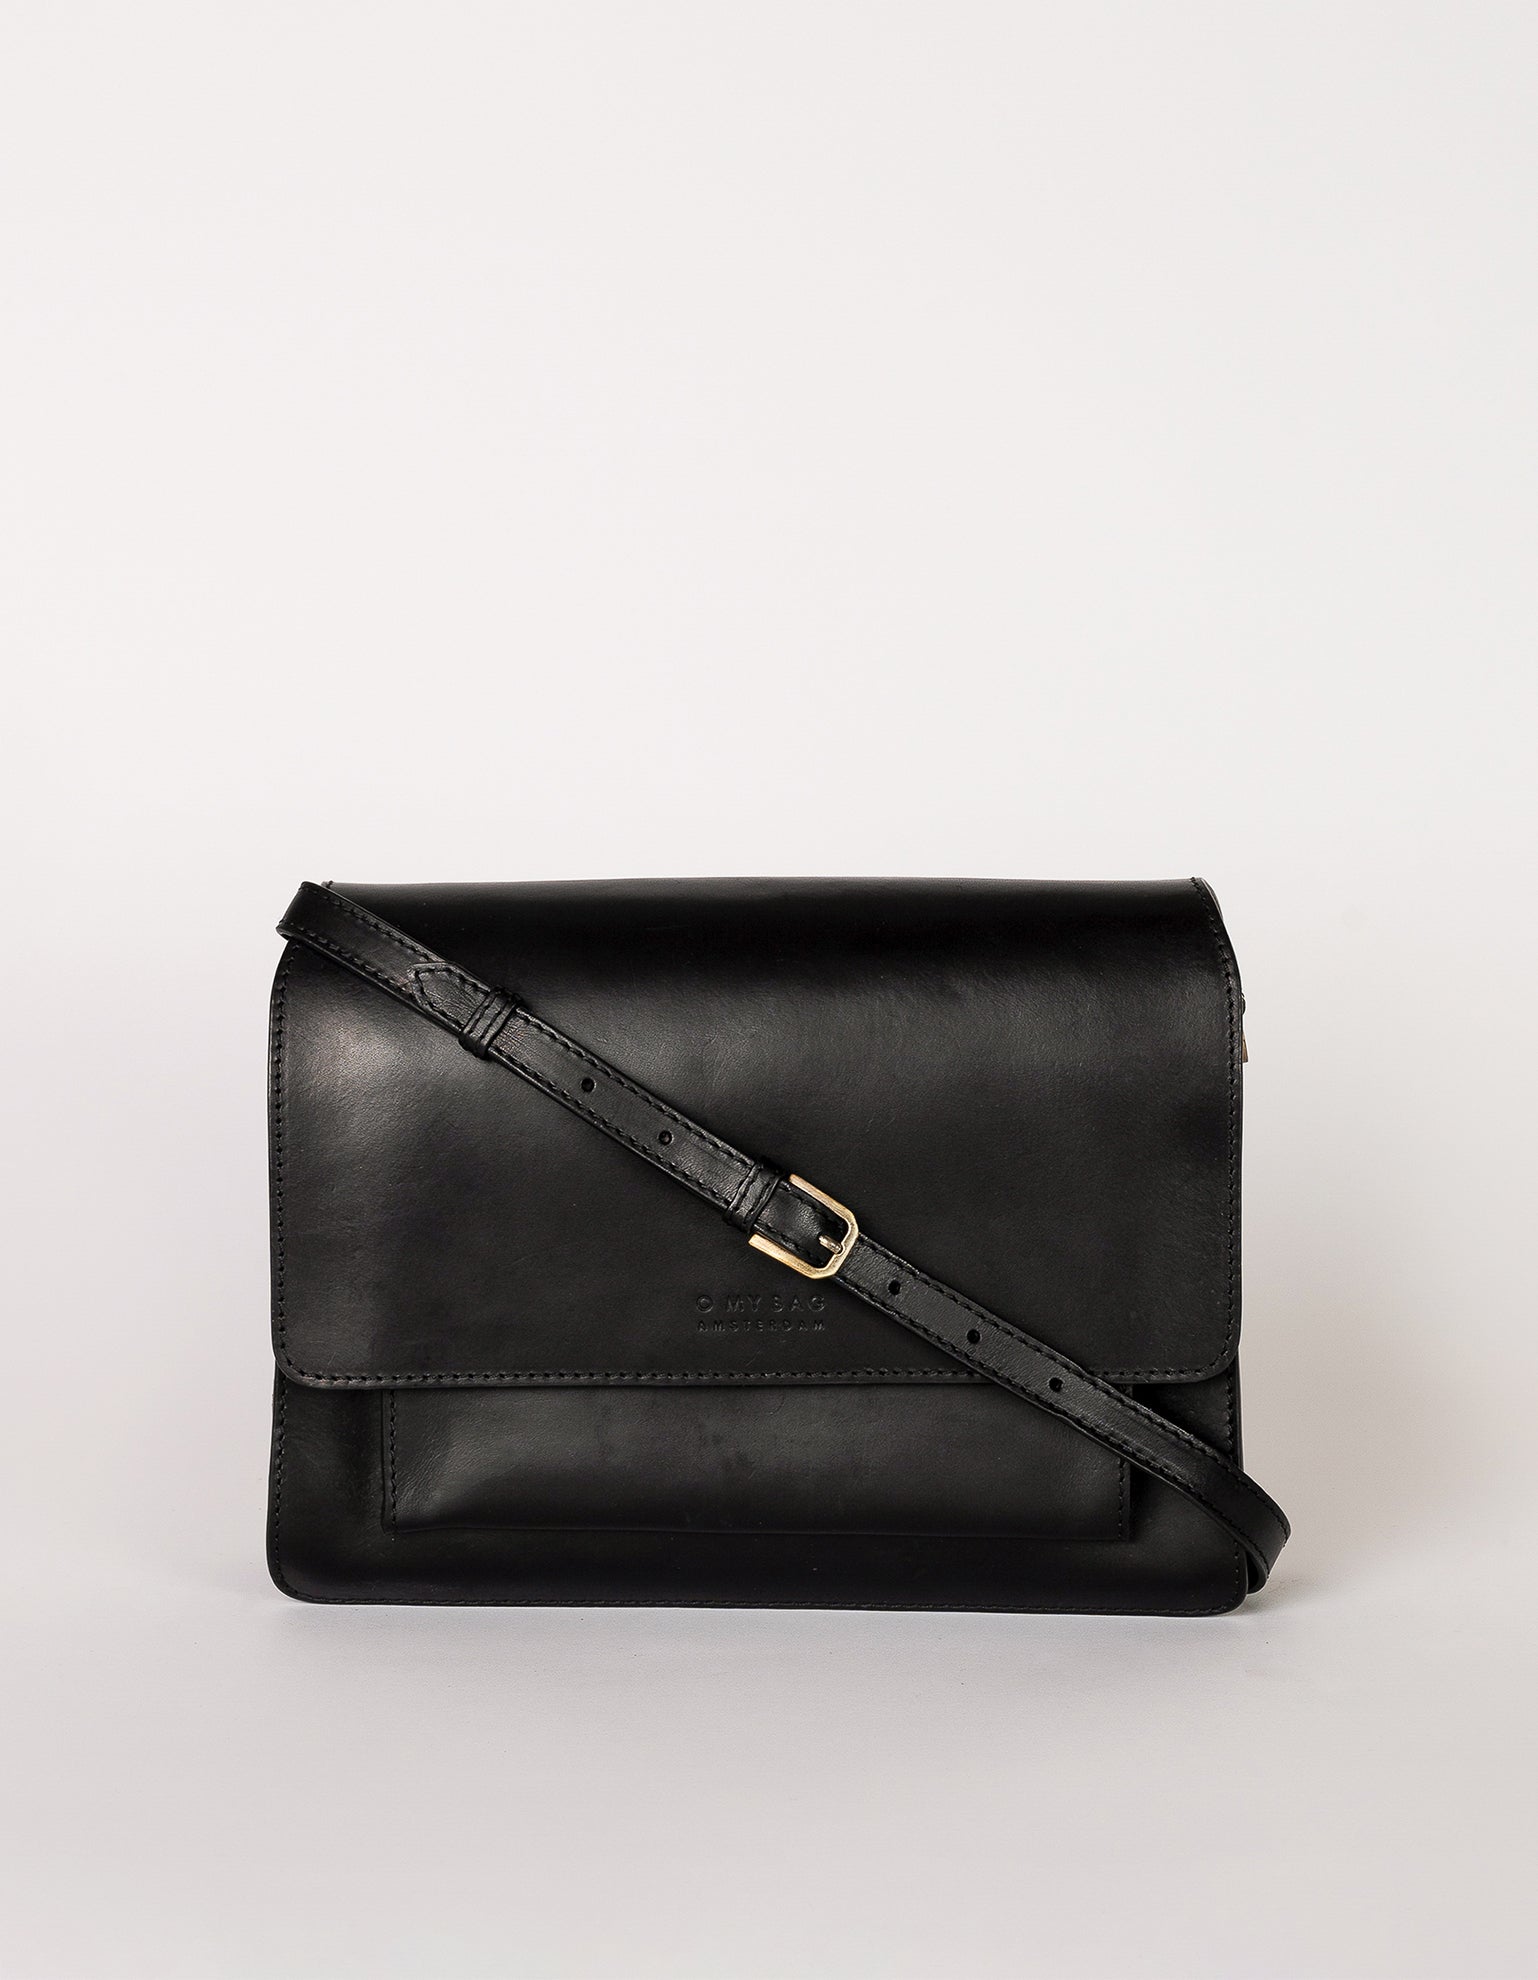 Harper Black Leather crossbody handbag. Front product image with adjustable leather strap.